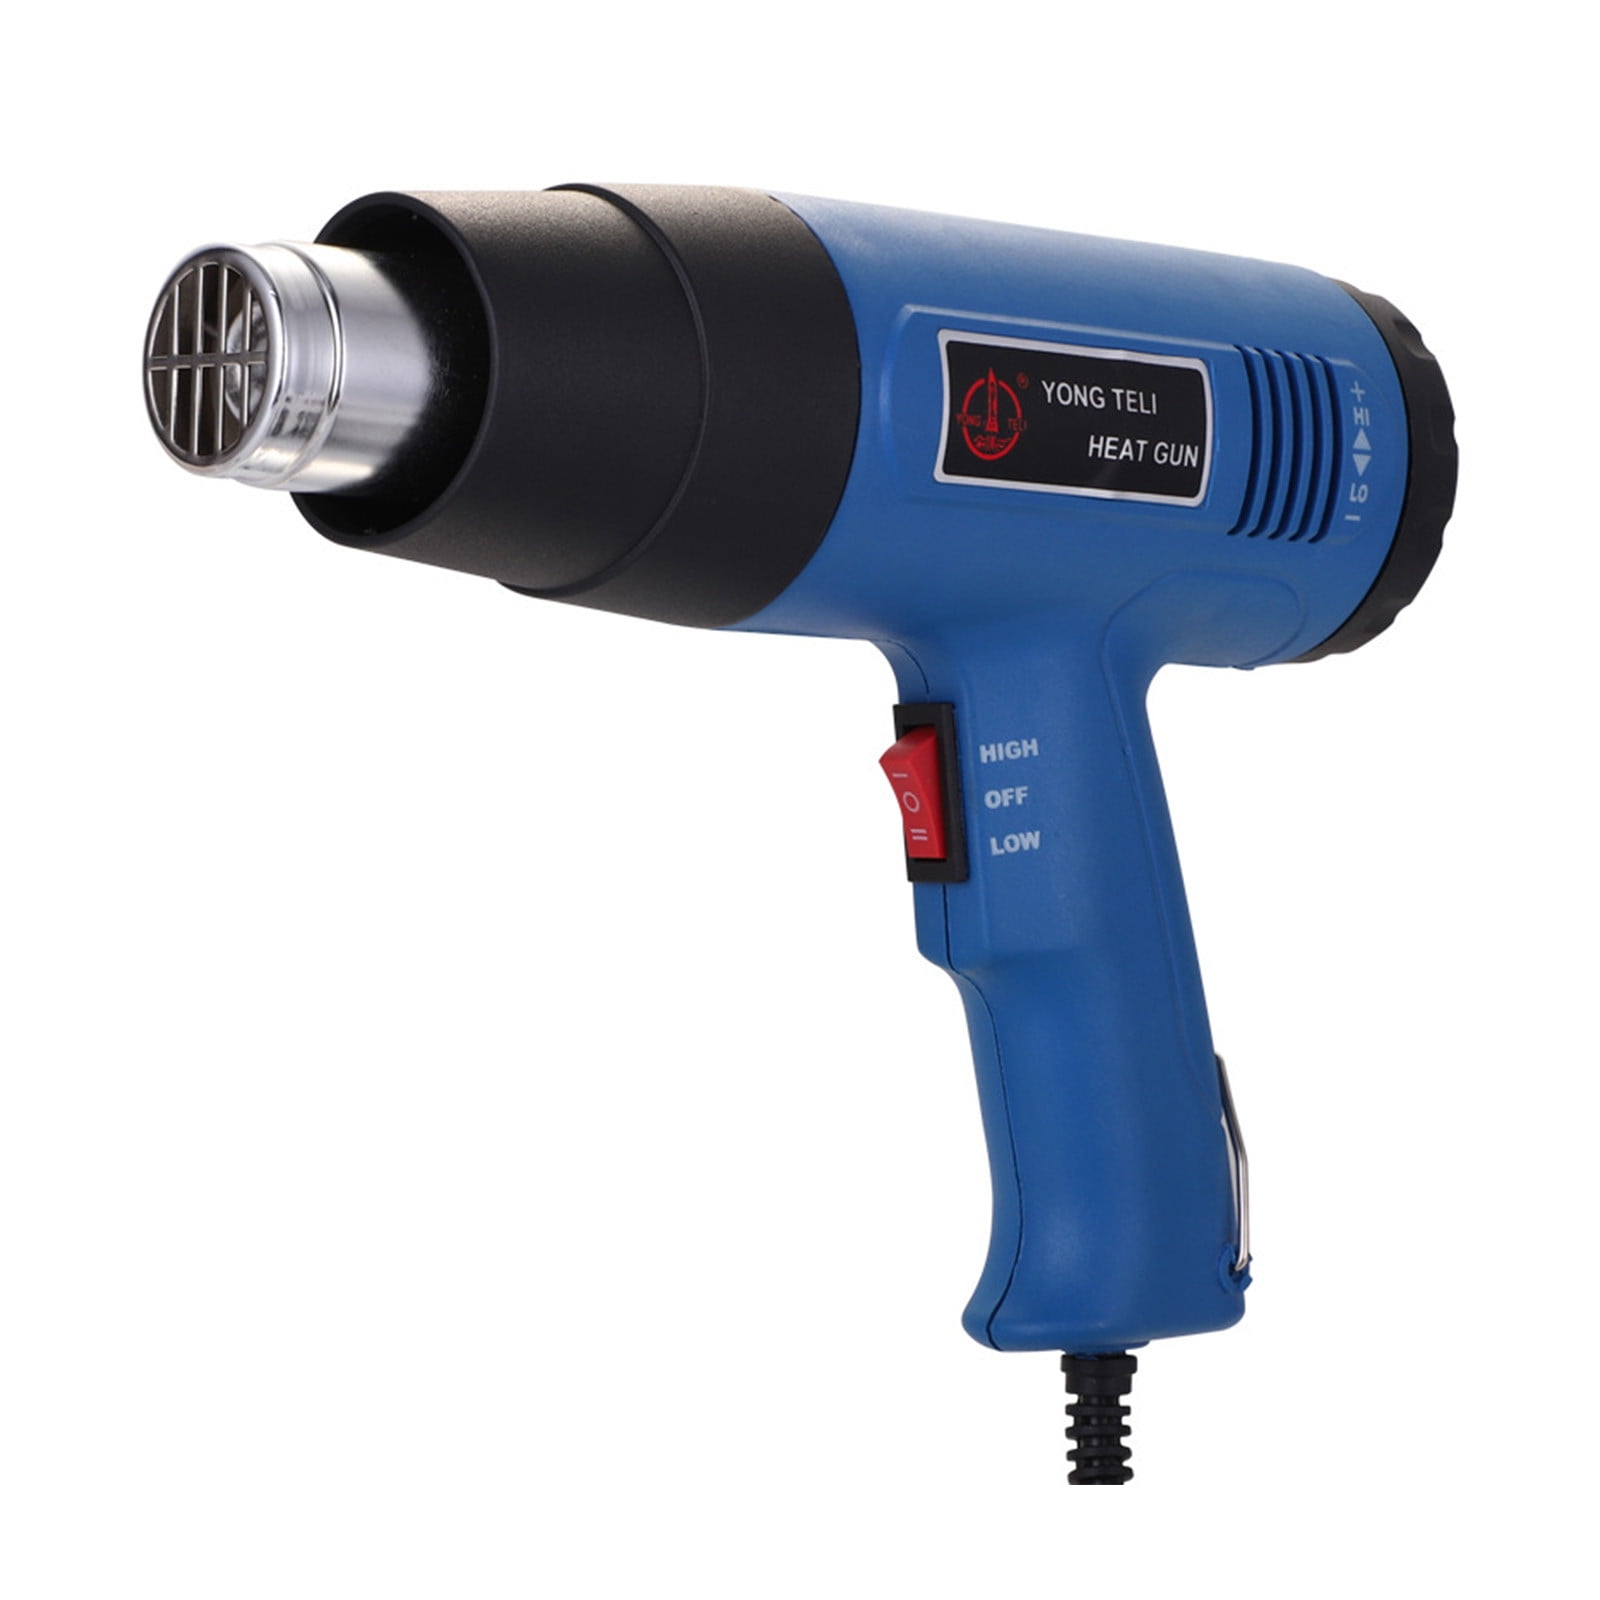 WorkPro 1200W Heat Gun with Dual Temperature, Model 2244, New, Size: 1200 Watts